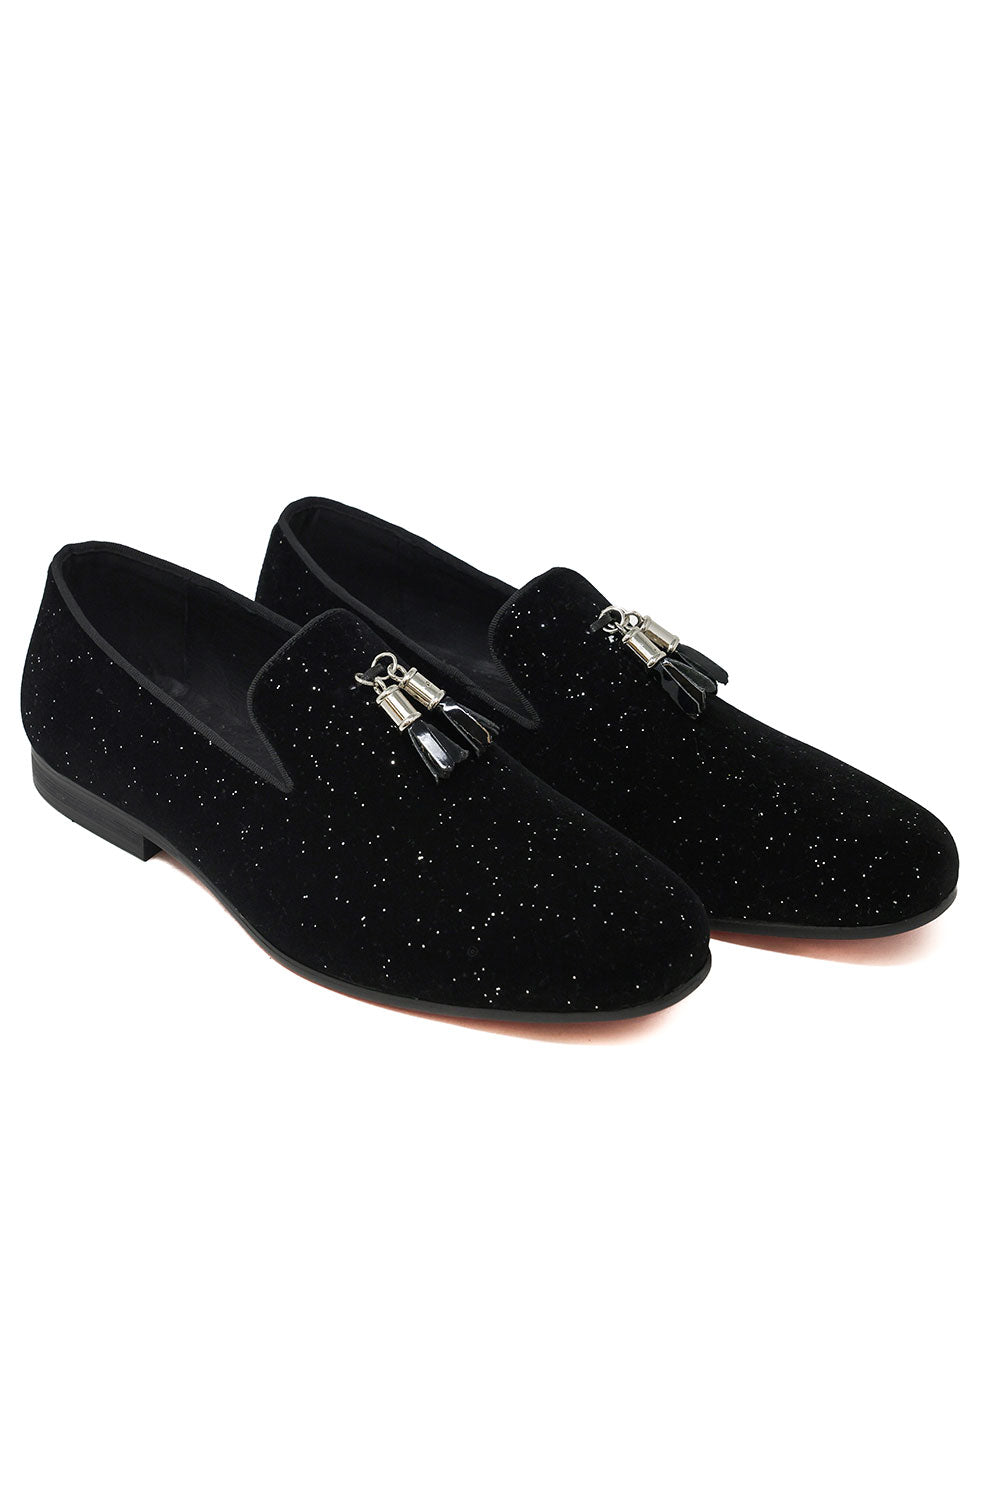 BARABAS Men's Glittery Shiny Luxury Tassel Loafer Shoes 2SH3106 Black Silver